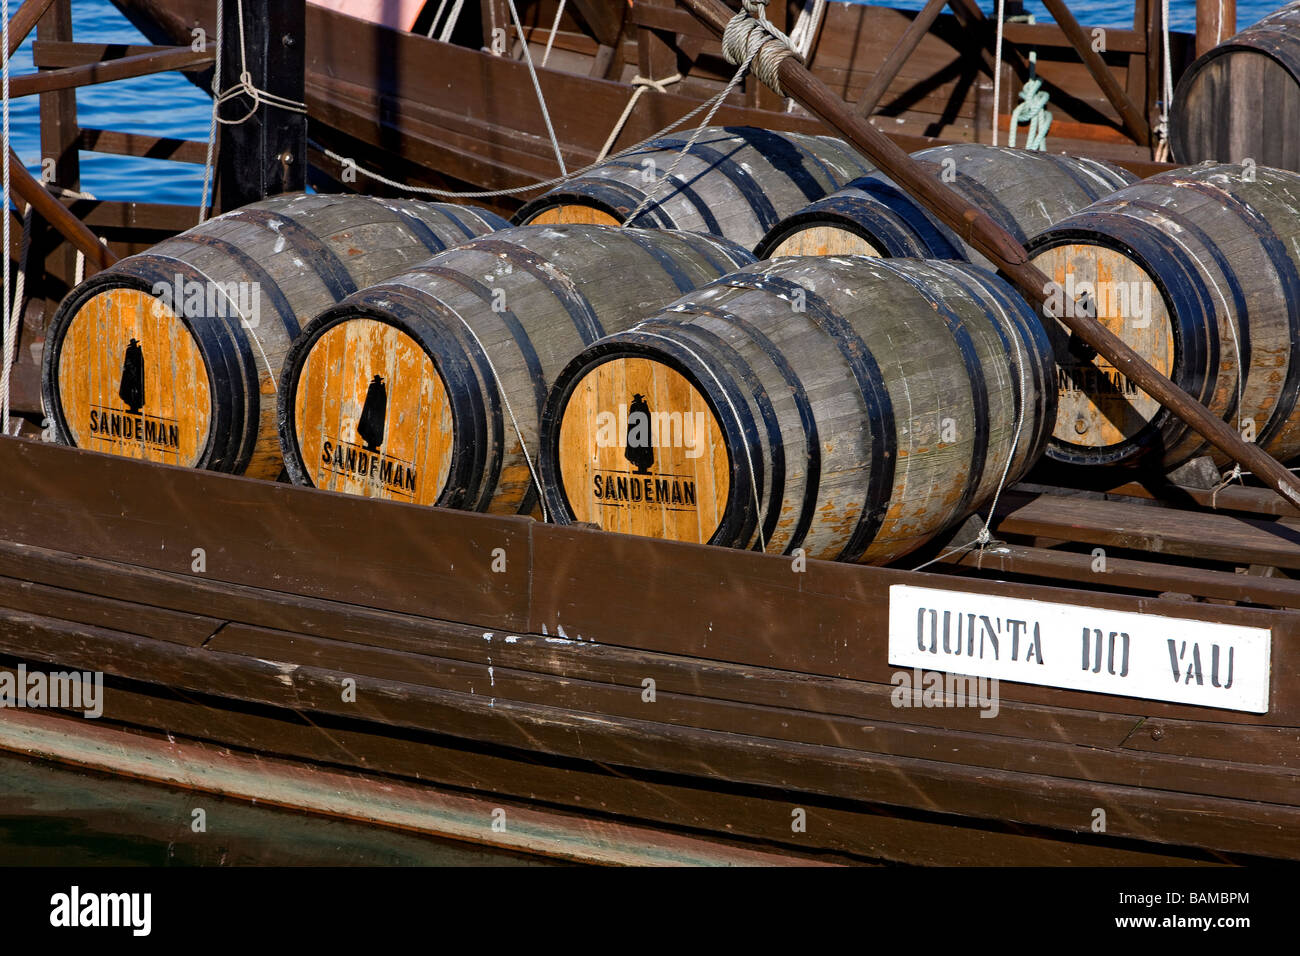 Portugal, Norte region, Rio Douro, Rabelo, boat used for the river carriage of Porto wine Stock Photo